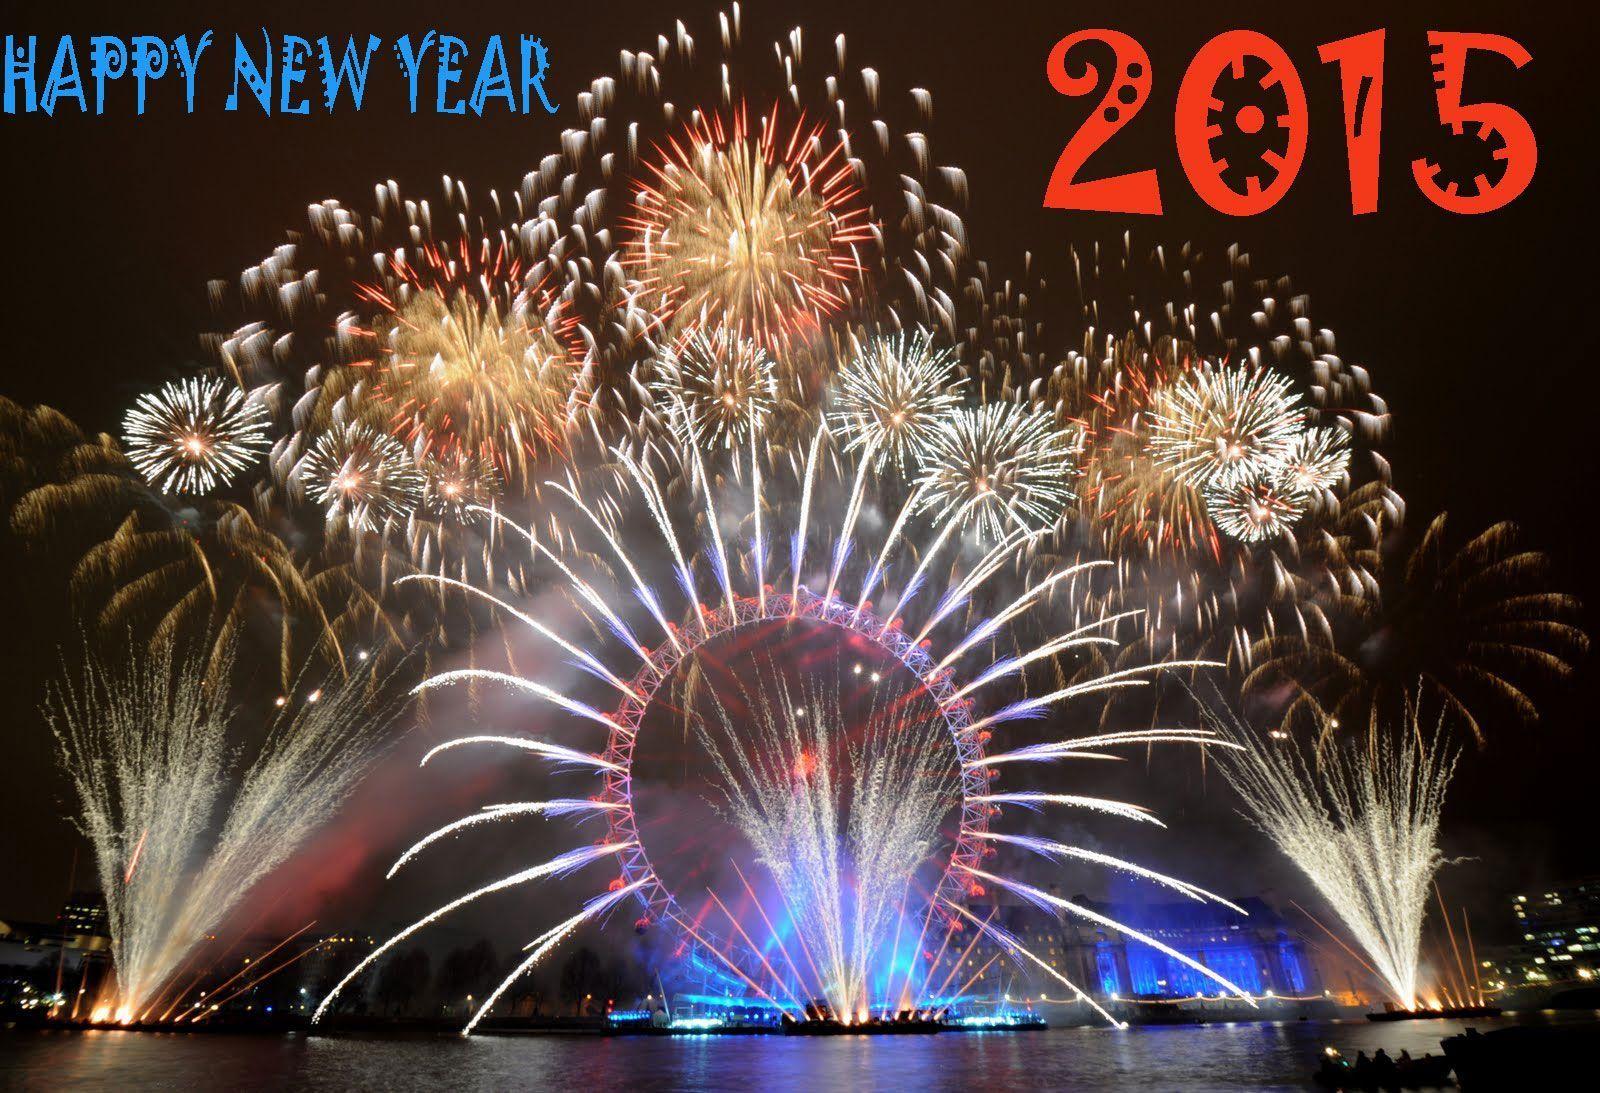 New Year 2015 desktop wallpaper